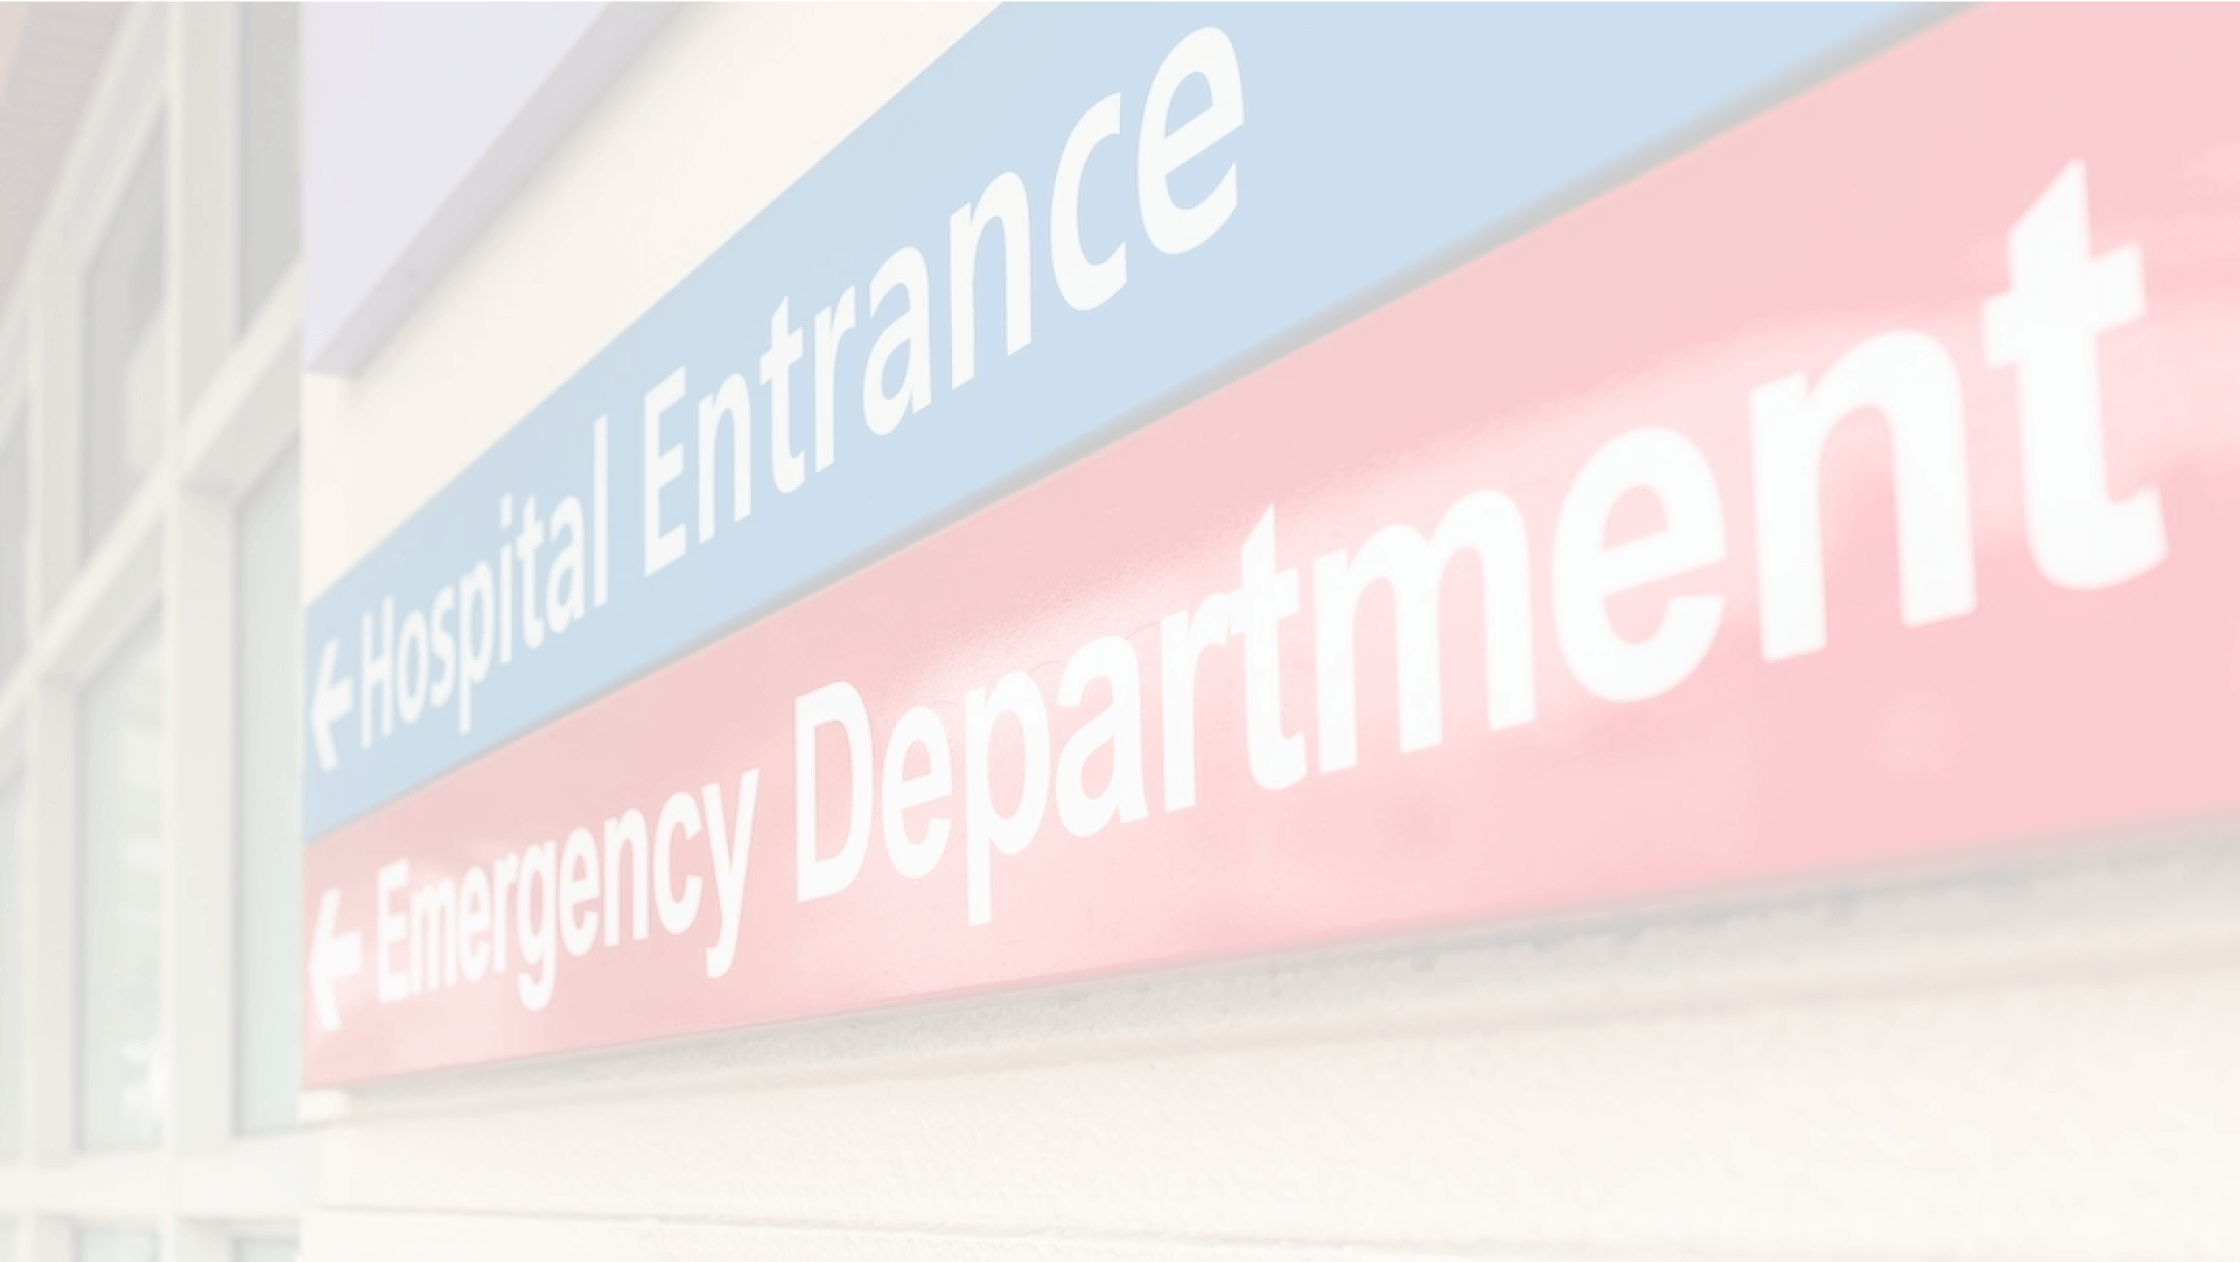 Hospital emergency entrance sign